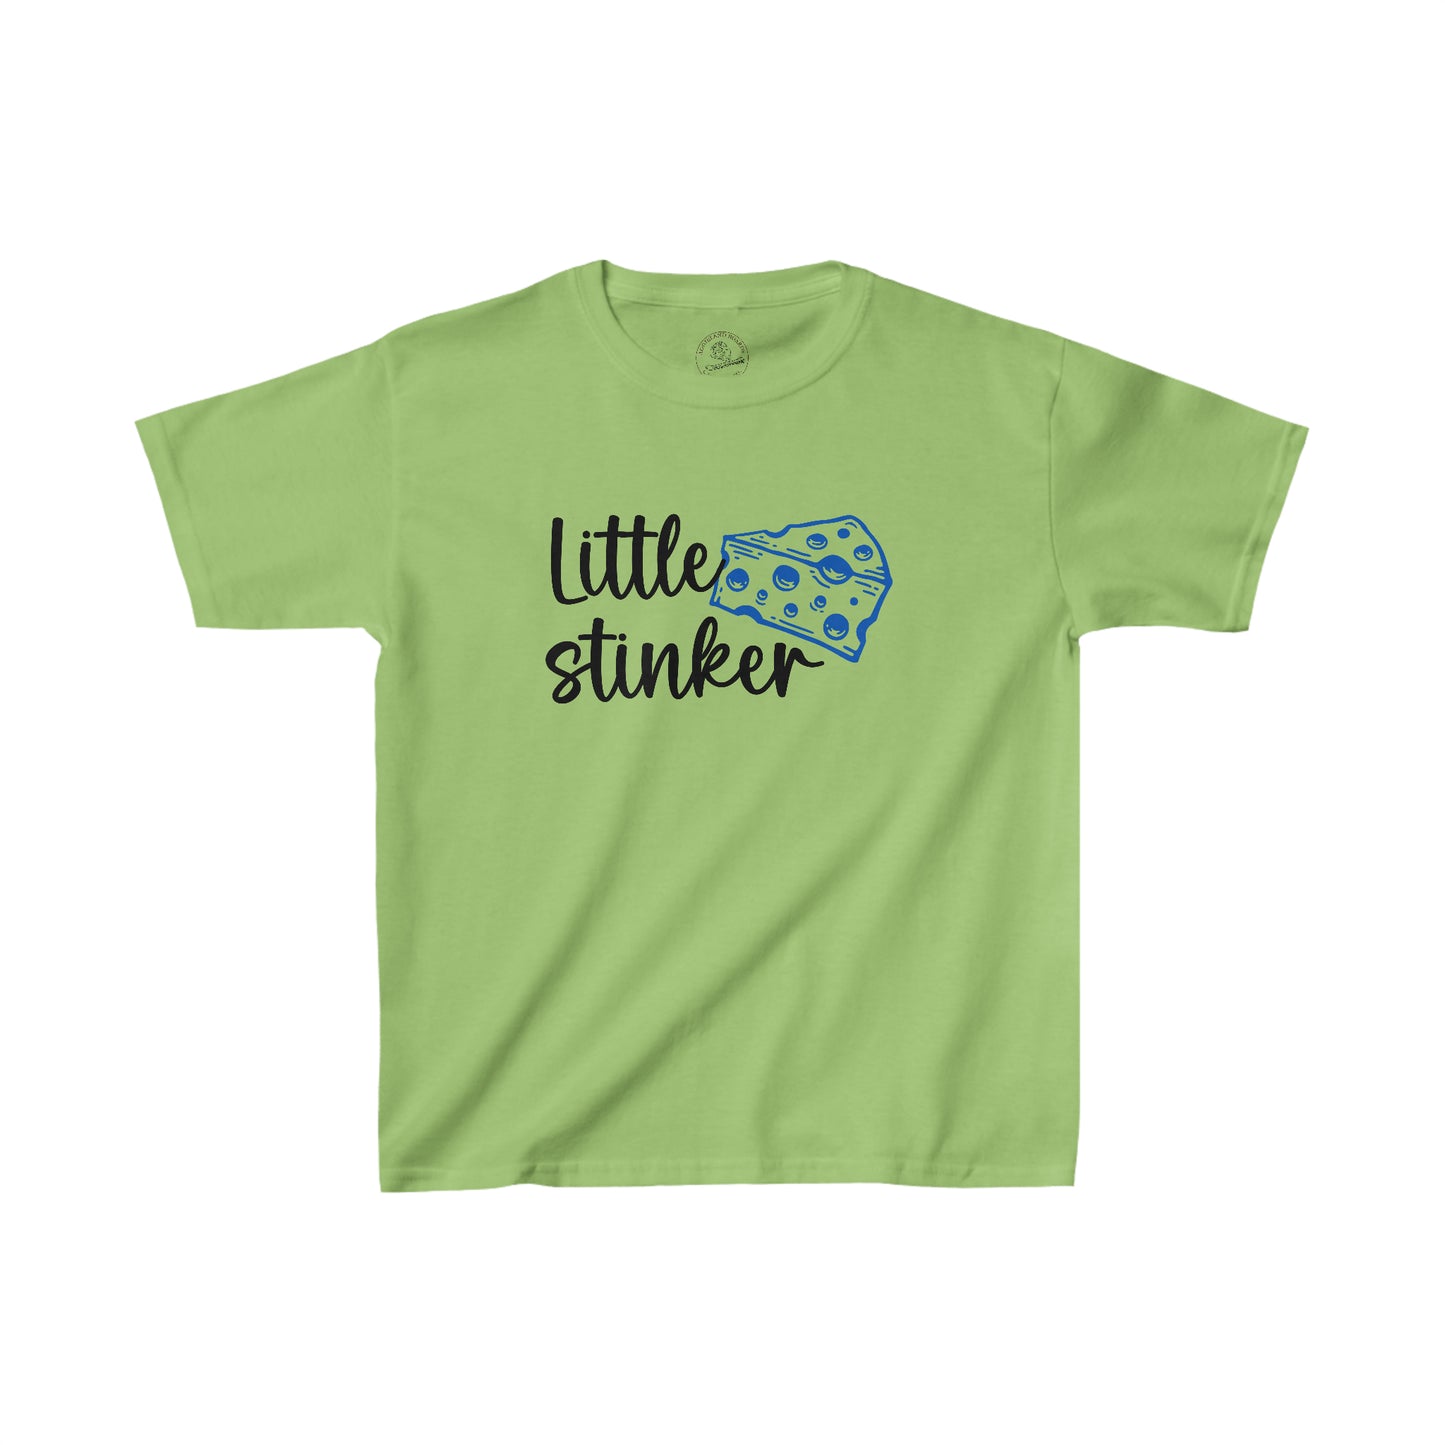 little stinker kids shirt- aggieland boards